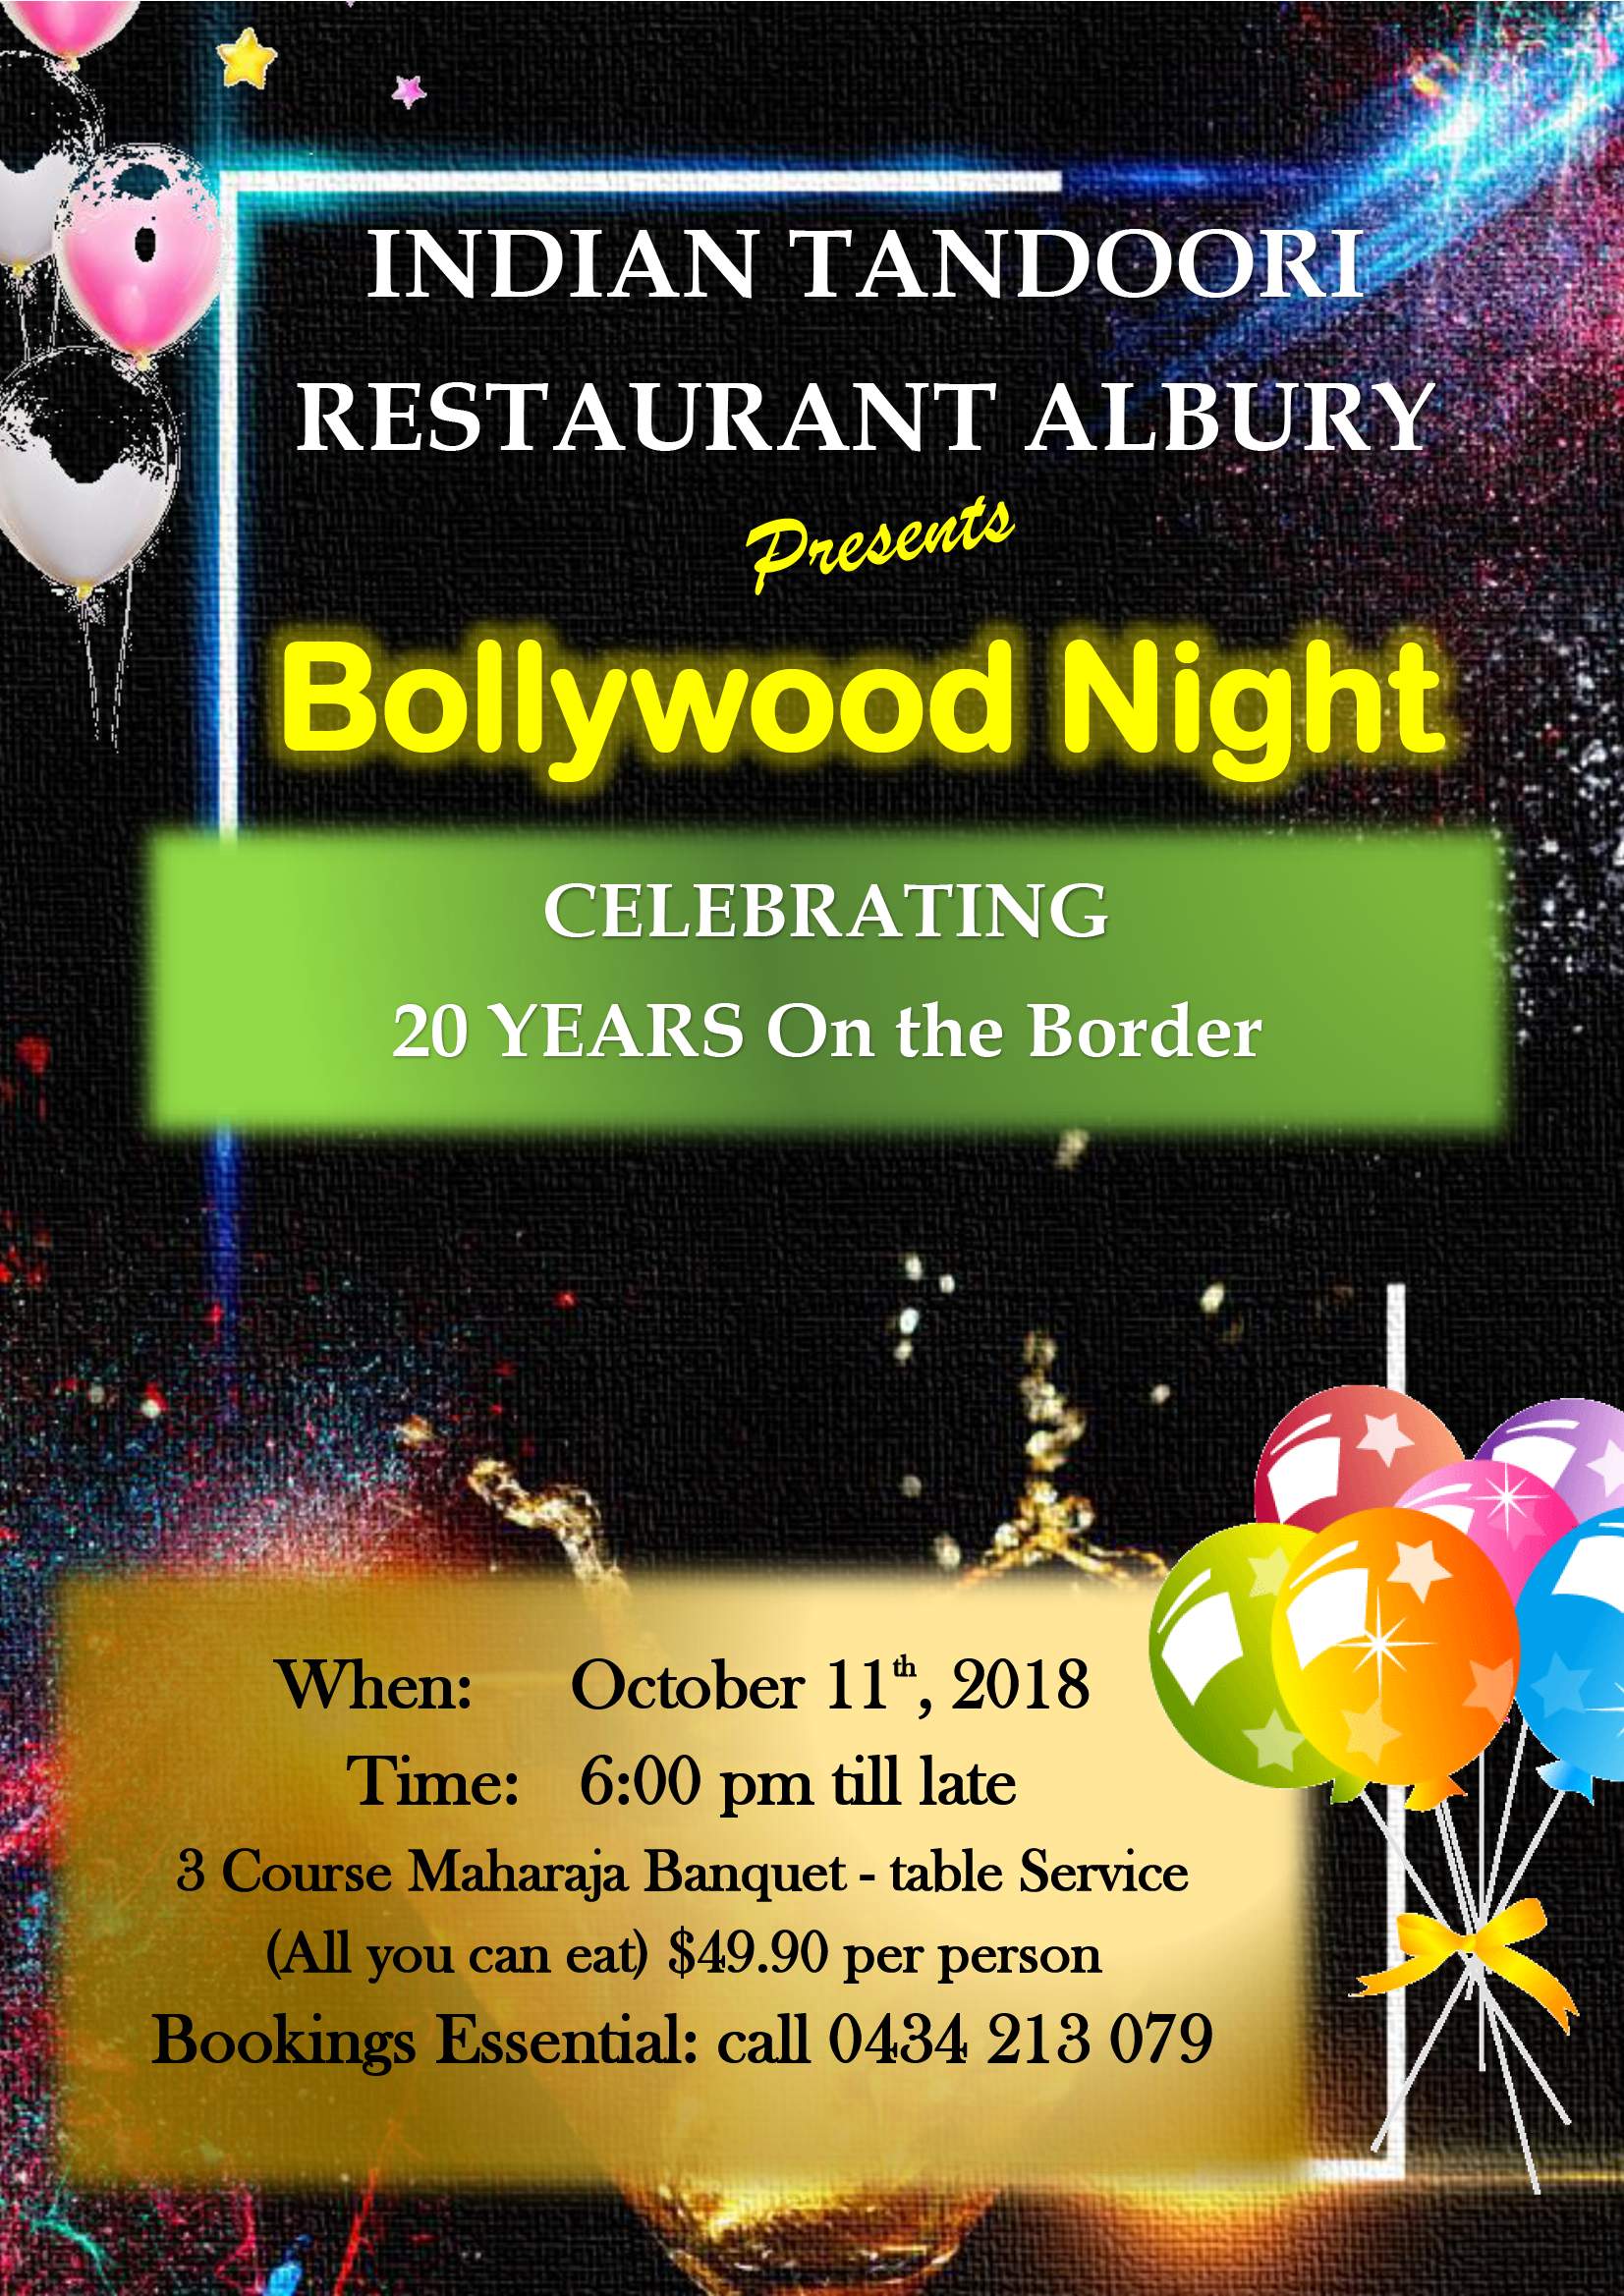 Bollywood Night - 20 Years on the Border - Indian Tandoori Restaurant